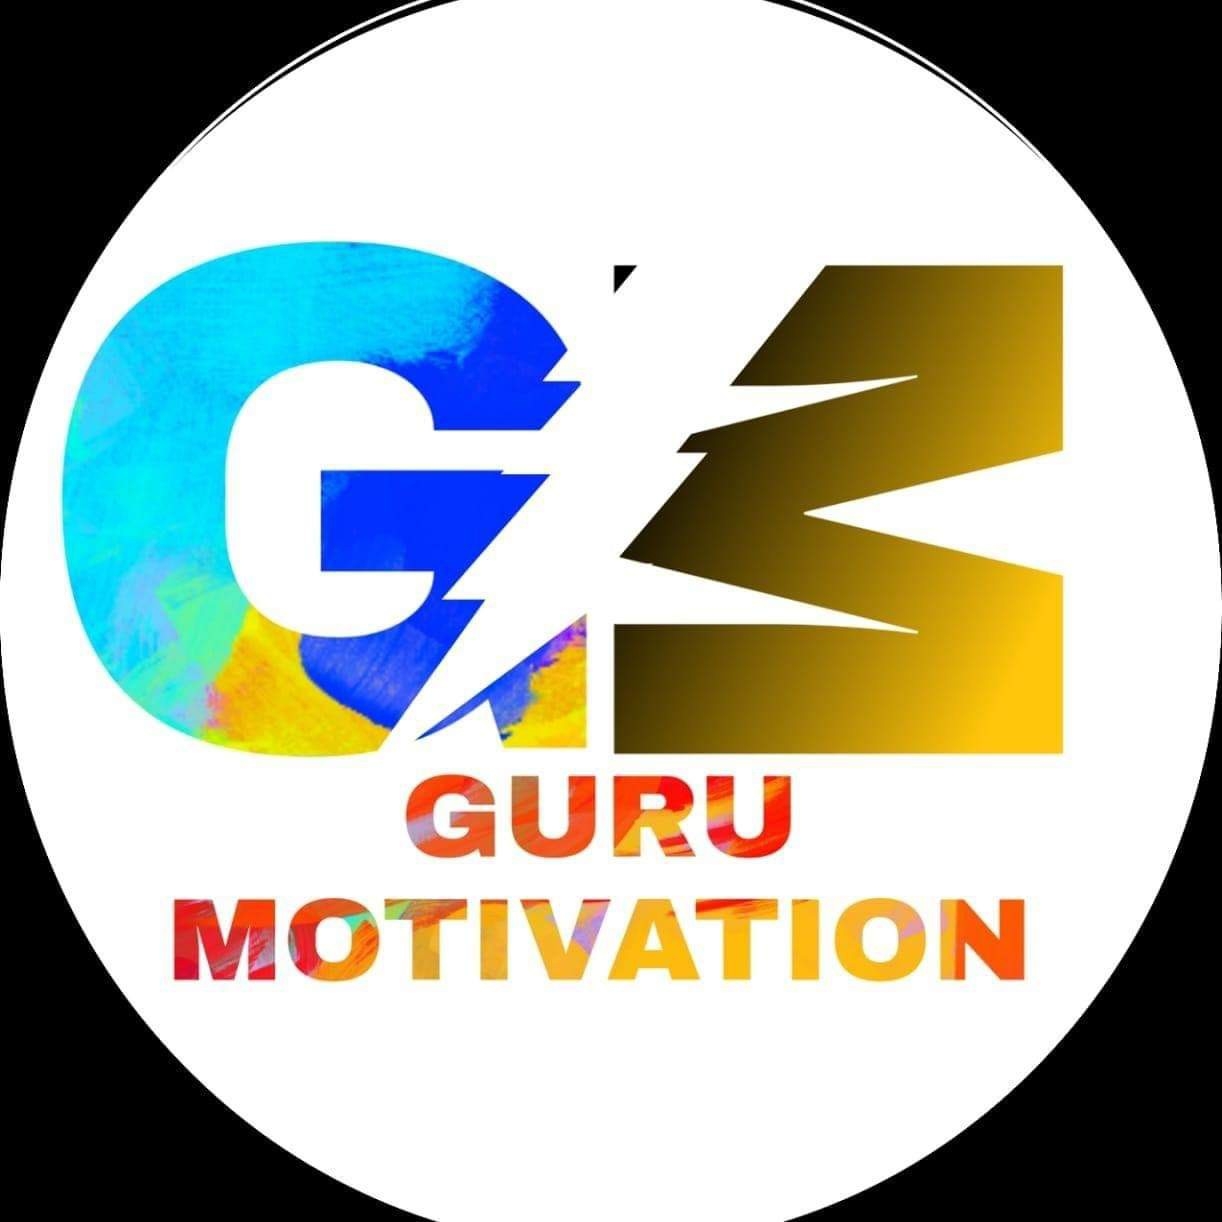 GURU MOTIVATION in Jaipur